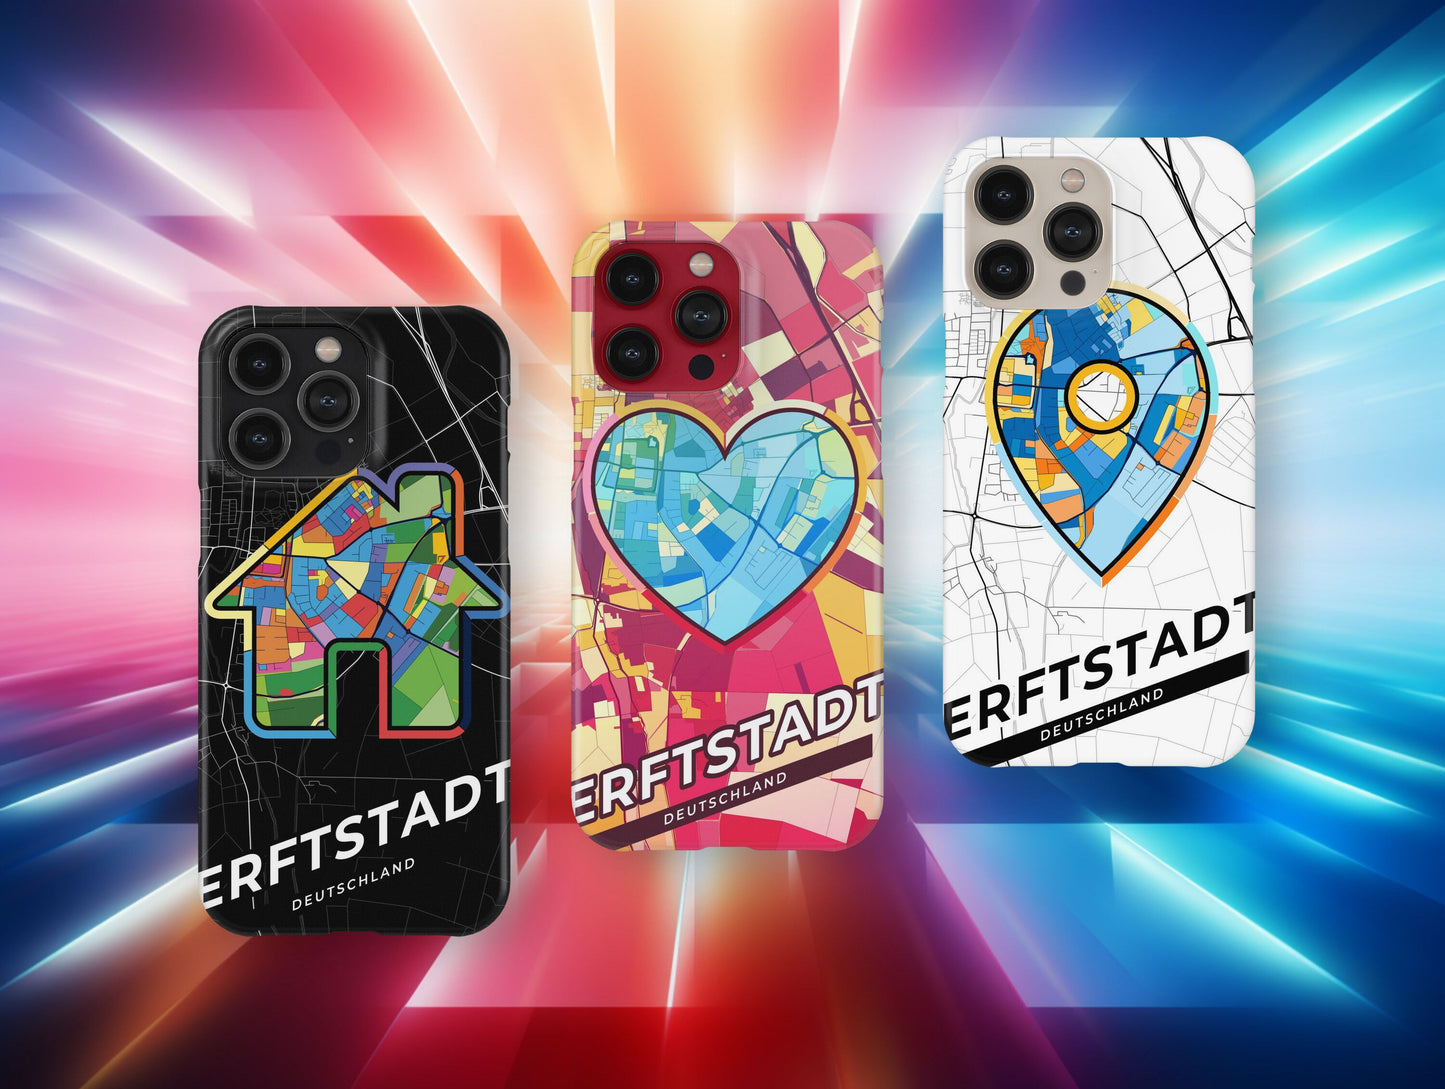 Erftstadt Deutschland slim phone case with colorful icon. Birthday, wedding or housewarming gift. Couple match cases.